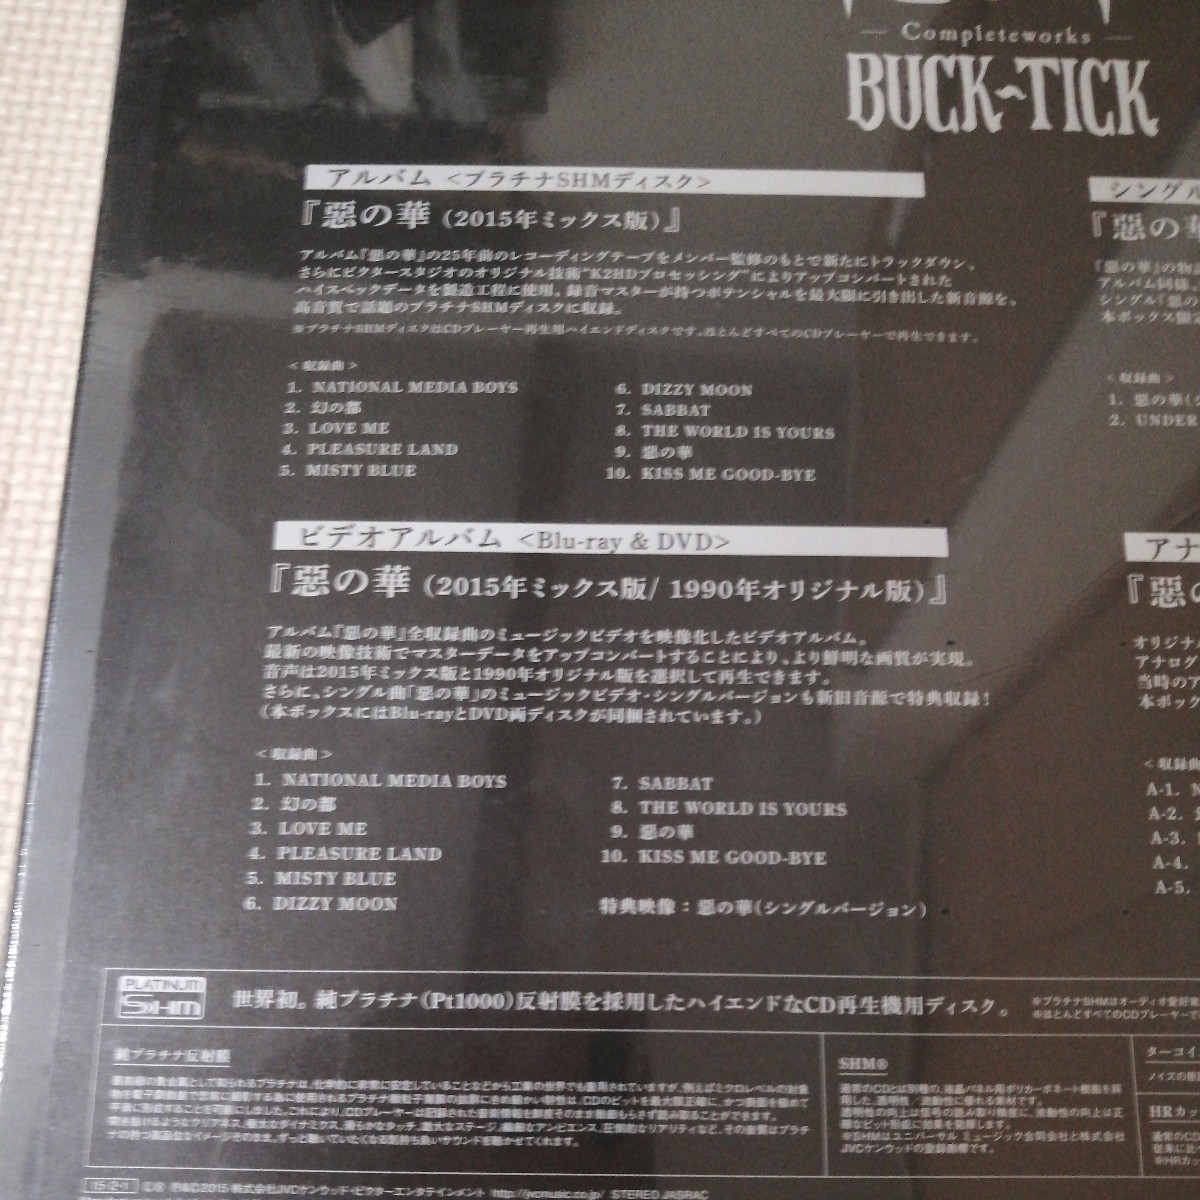  new goods unopened BUCK-TICK 5 sheets set 25 anniversary memorial box [.. .-Completeworks -] complete production limitation album Sakurai .. inspection ) unusual empty bad. .